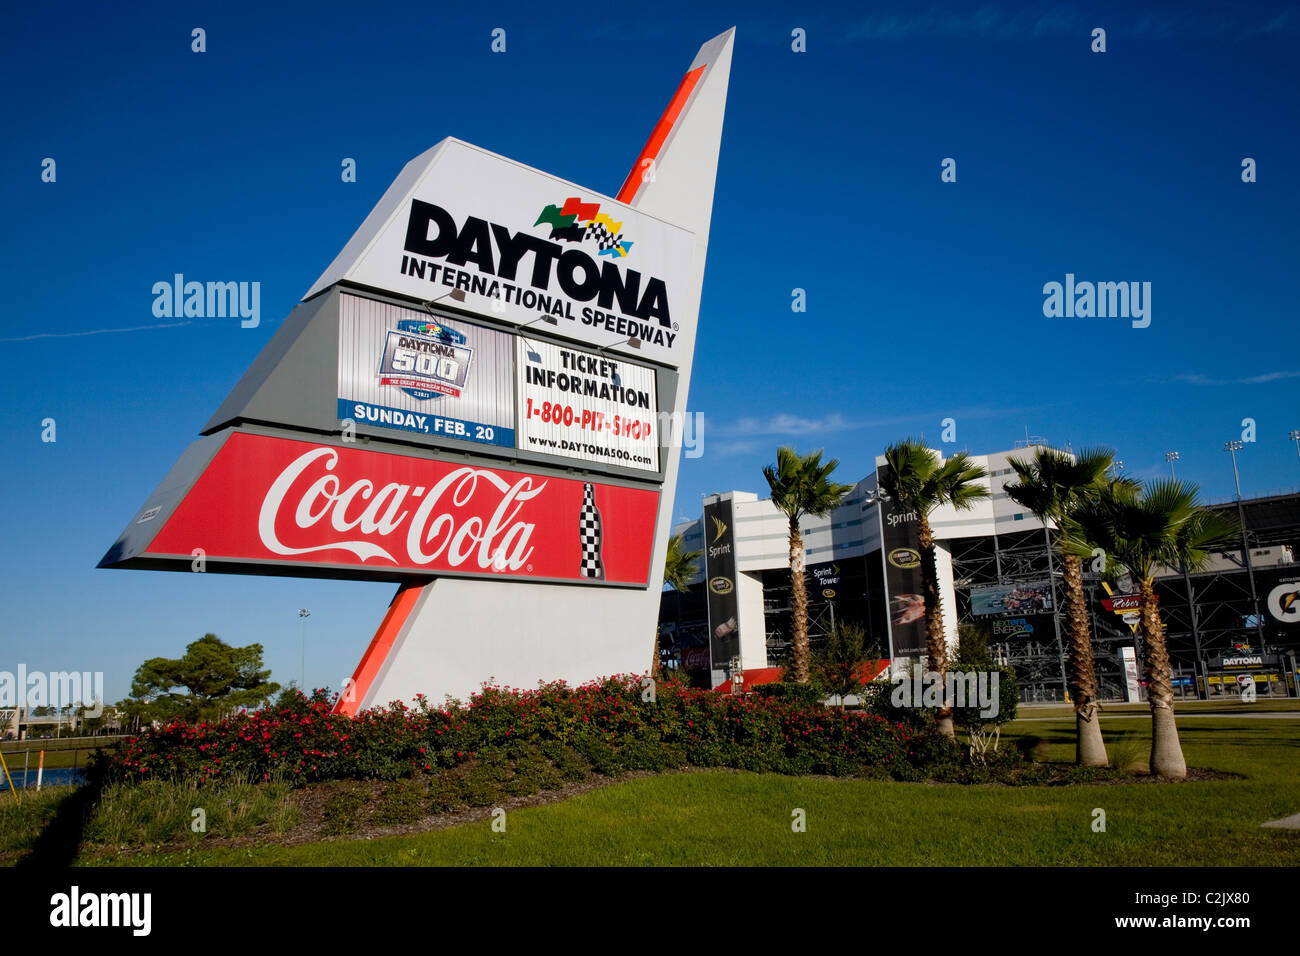 Entrée privée, Daytona International Speedway, Daytona Beach, FL Banque D'Images